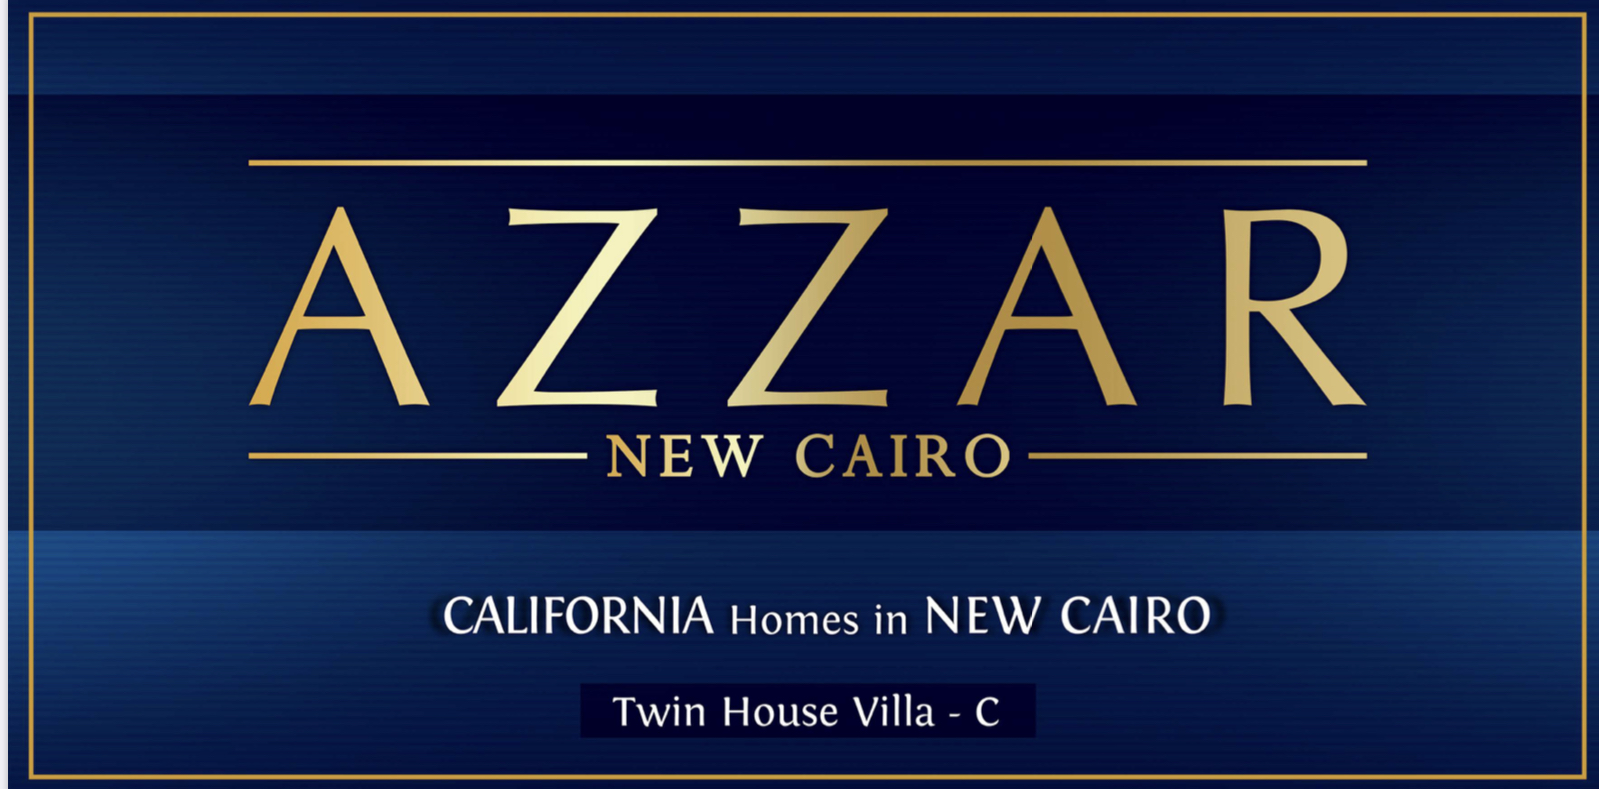 5 bedroom villas for sale in Azar Compound, New Cairo, 237m